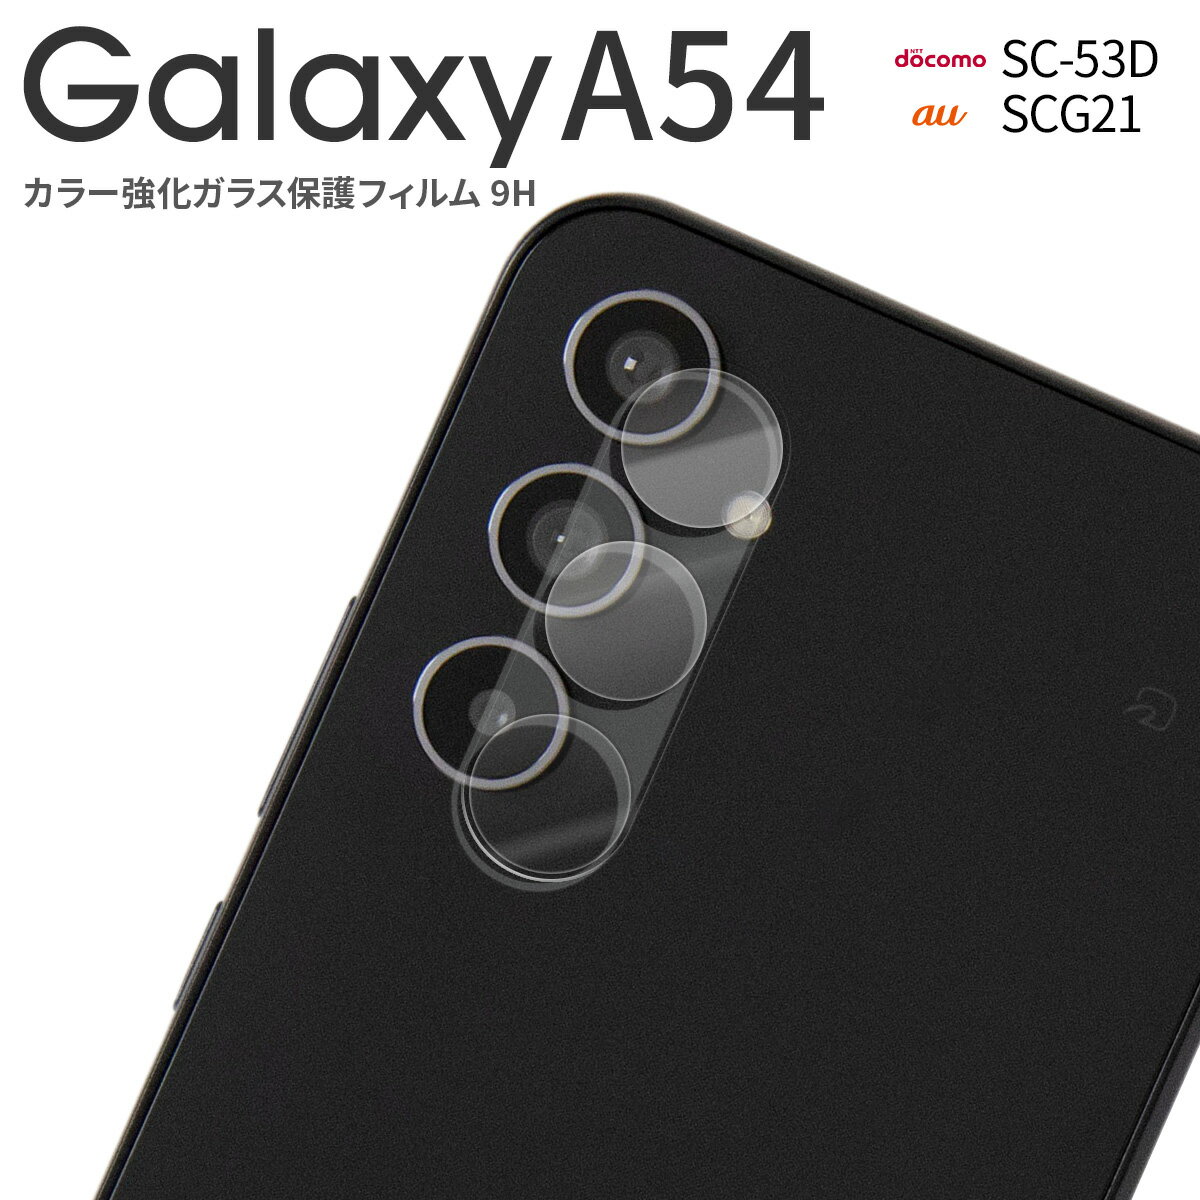  Galaxy A54 レンズガラス Galaxy A54 レンズフィルム Galaxy A54 スマホレンズ Galaxy A54 スマホ ギャラクシー スマホレンズ 画面保護 透明 クリア カメラレンズ カメラ保護 全面 指紋防止